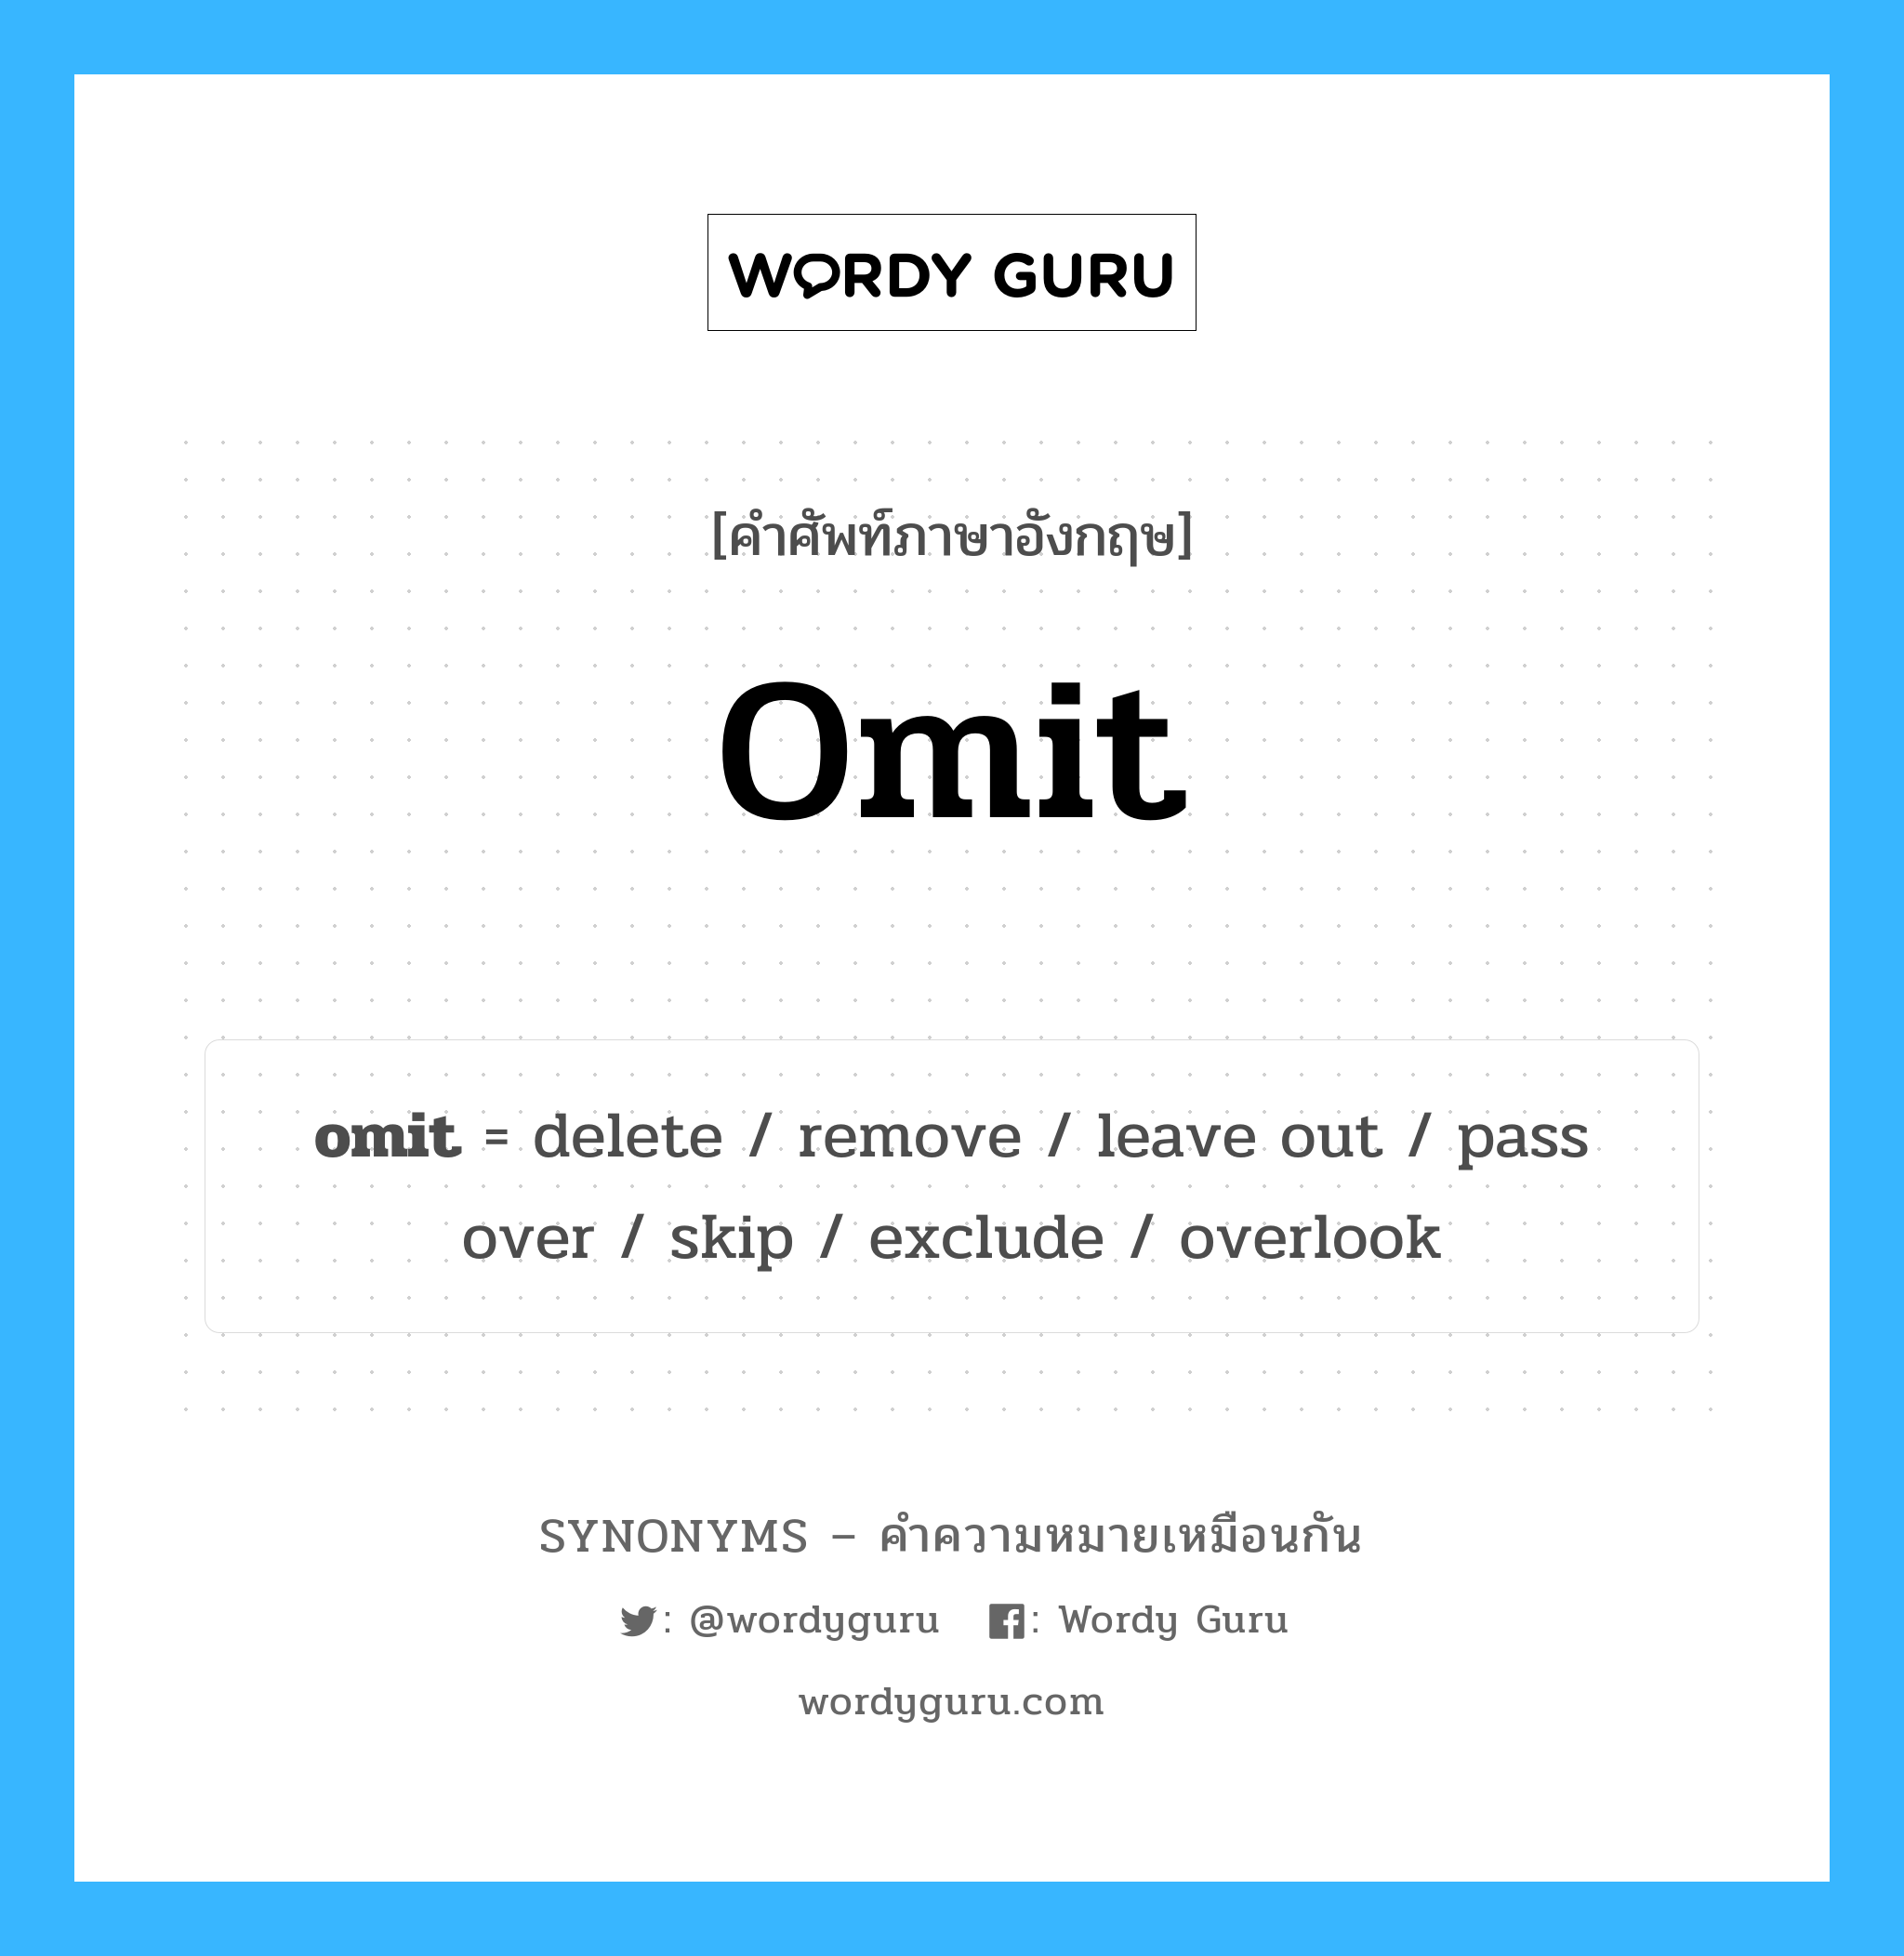 overlook เป็นหนึ่งใน omit และมีคำอื่น ๆ อีกดังนี้, คำศัพท์ภาษาอังกฤษ overlook ความหมายคล้ายกันกับ omit แปลว่า มองข้าม หมวด omit